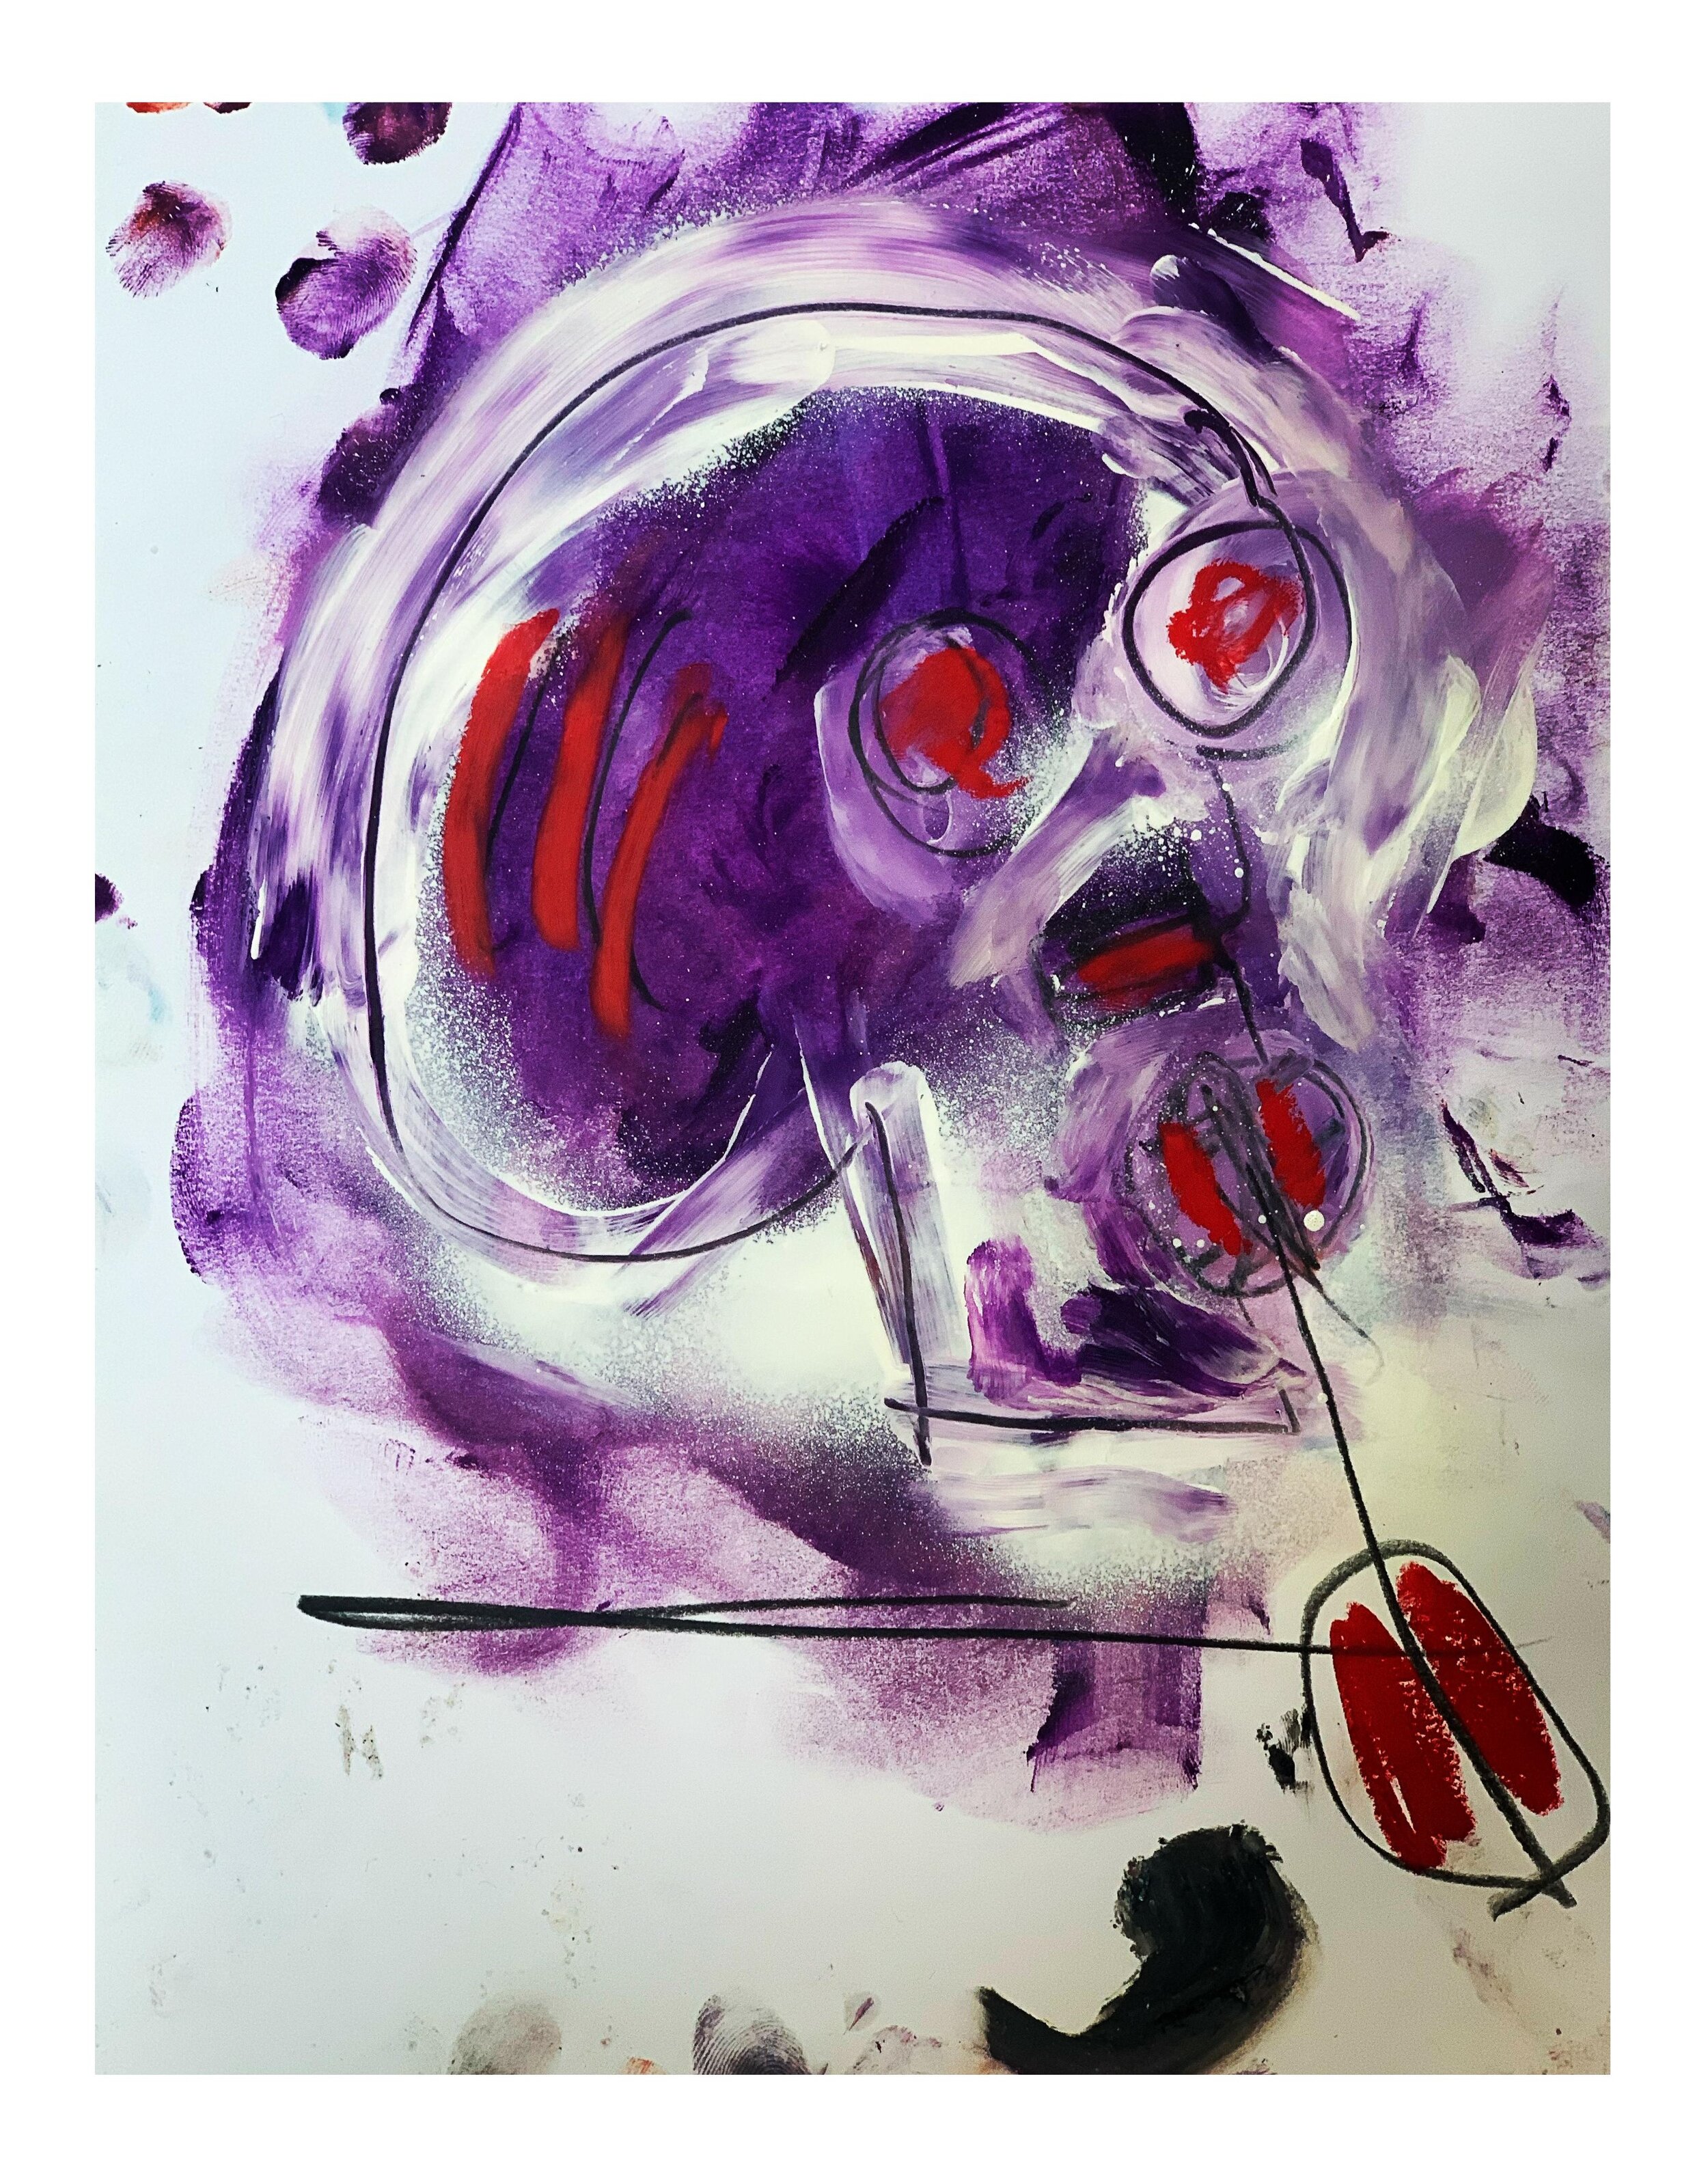 *SOLD* - "Purple Skull"